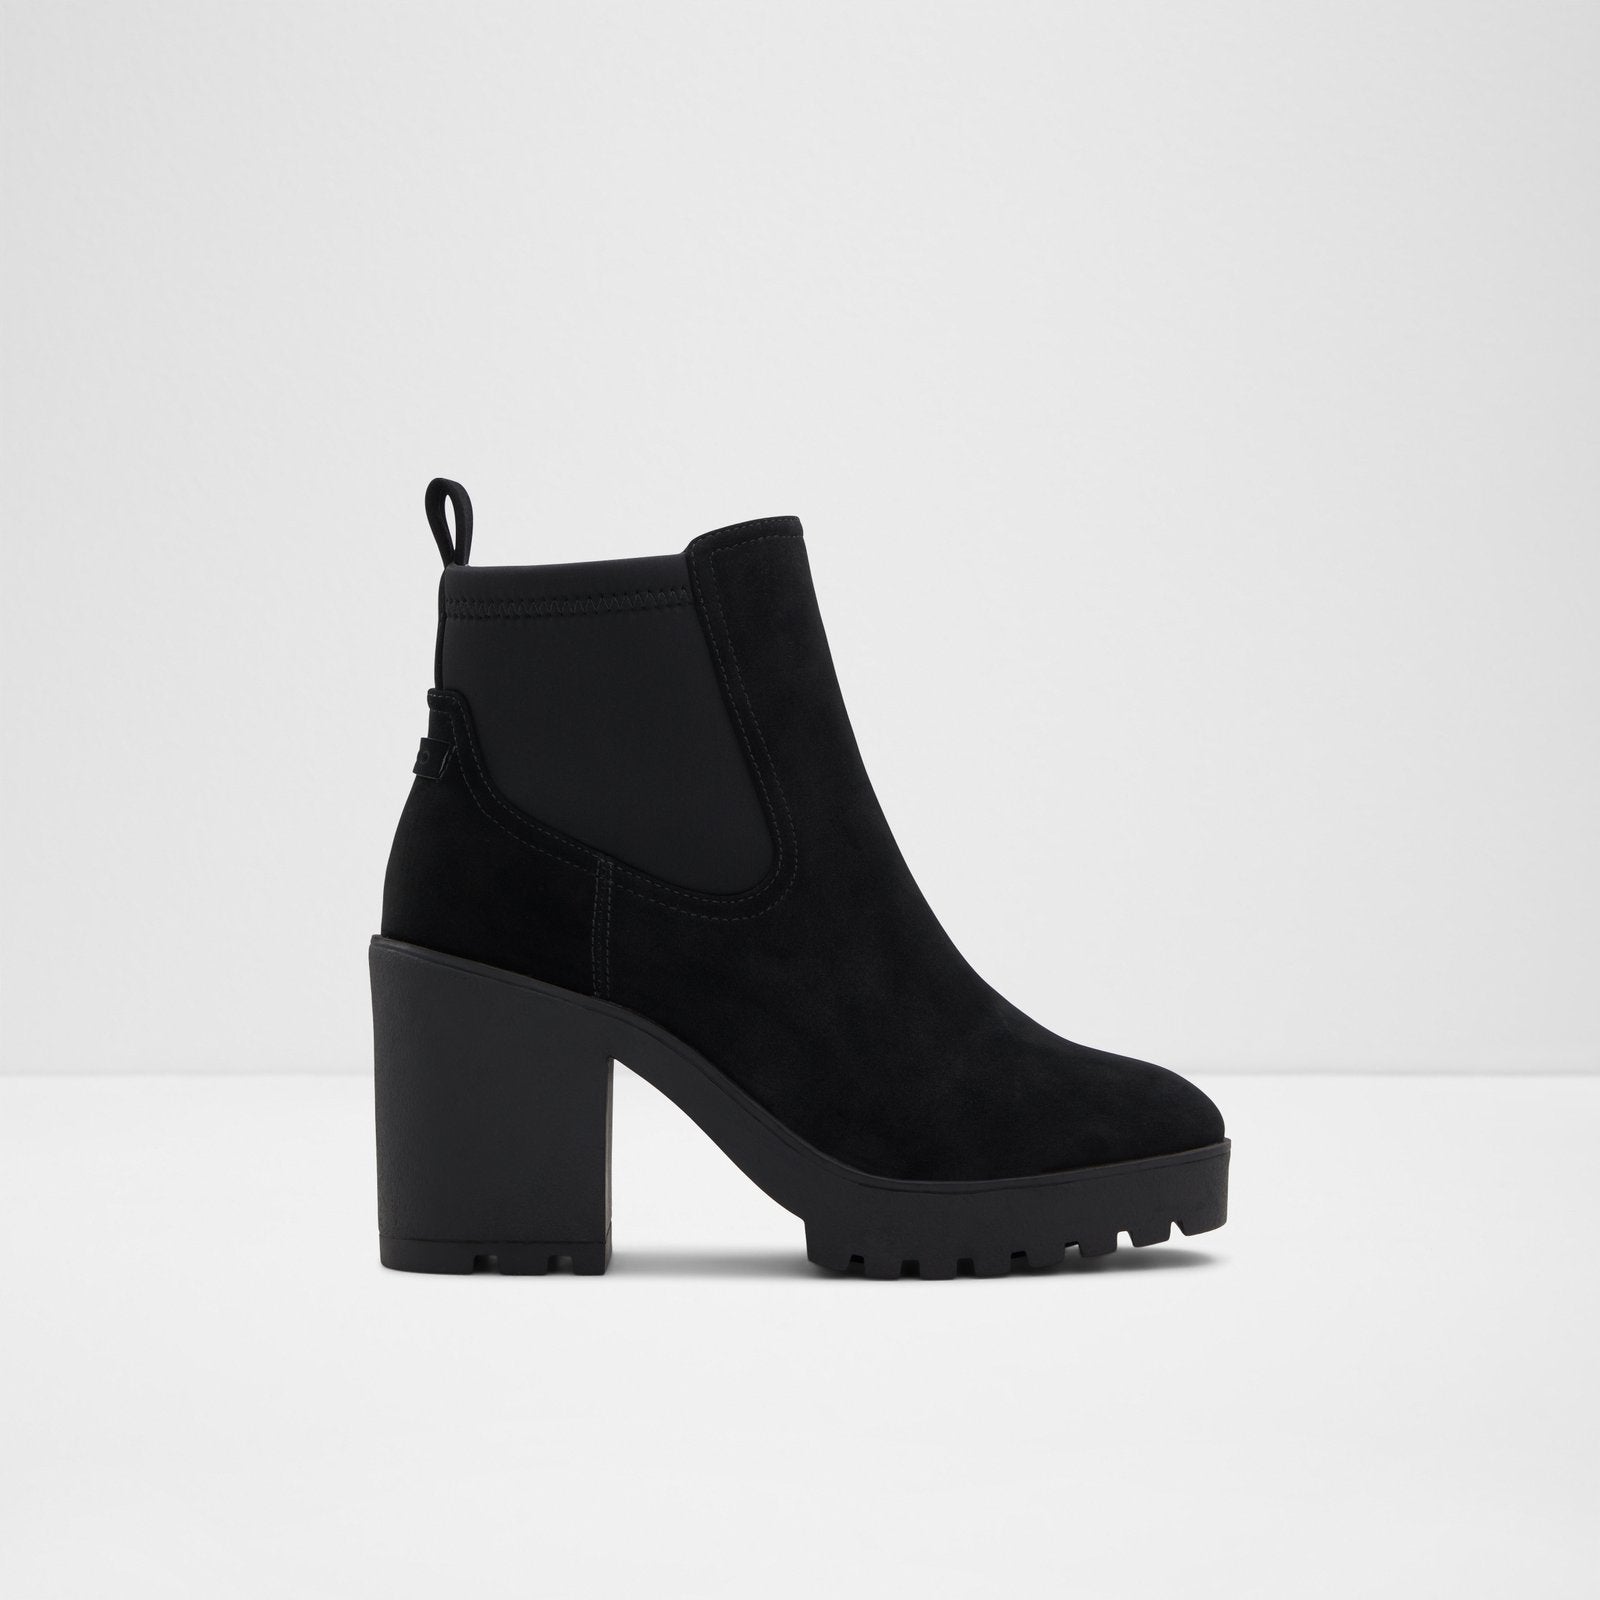 Aldo Women’s Heeled Boots Chetta (Black)